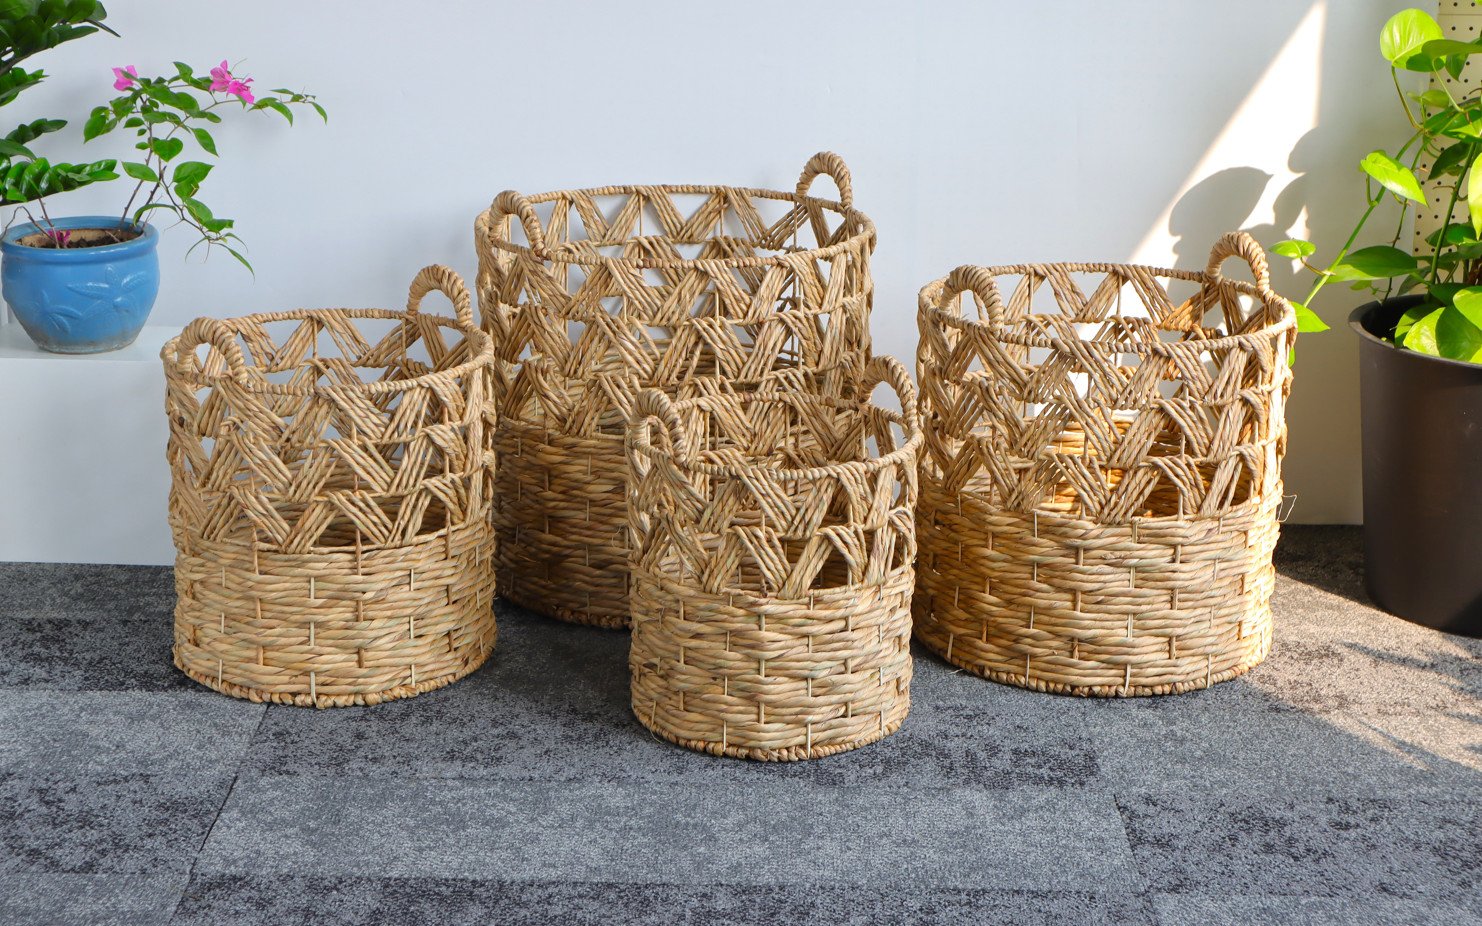 Baskets & Bins